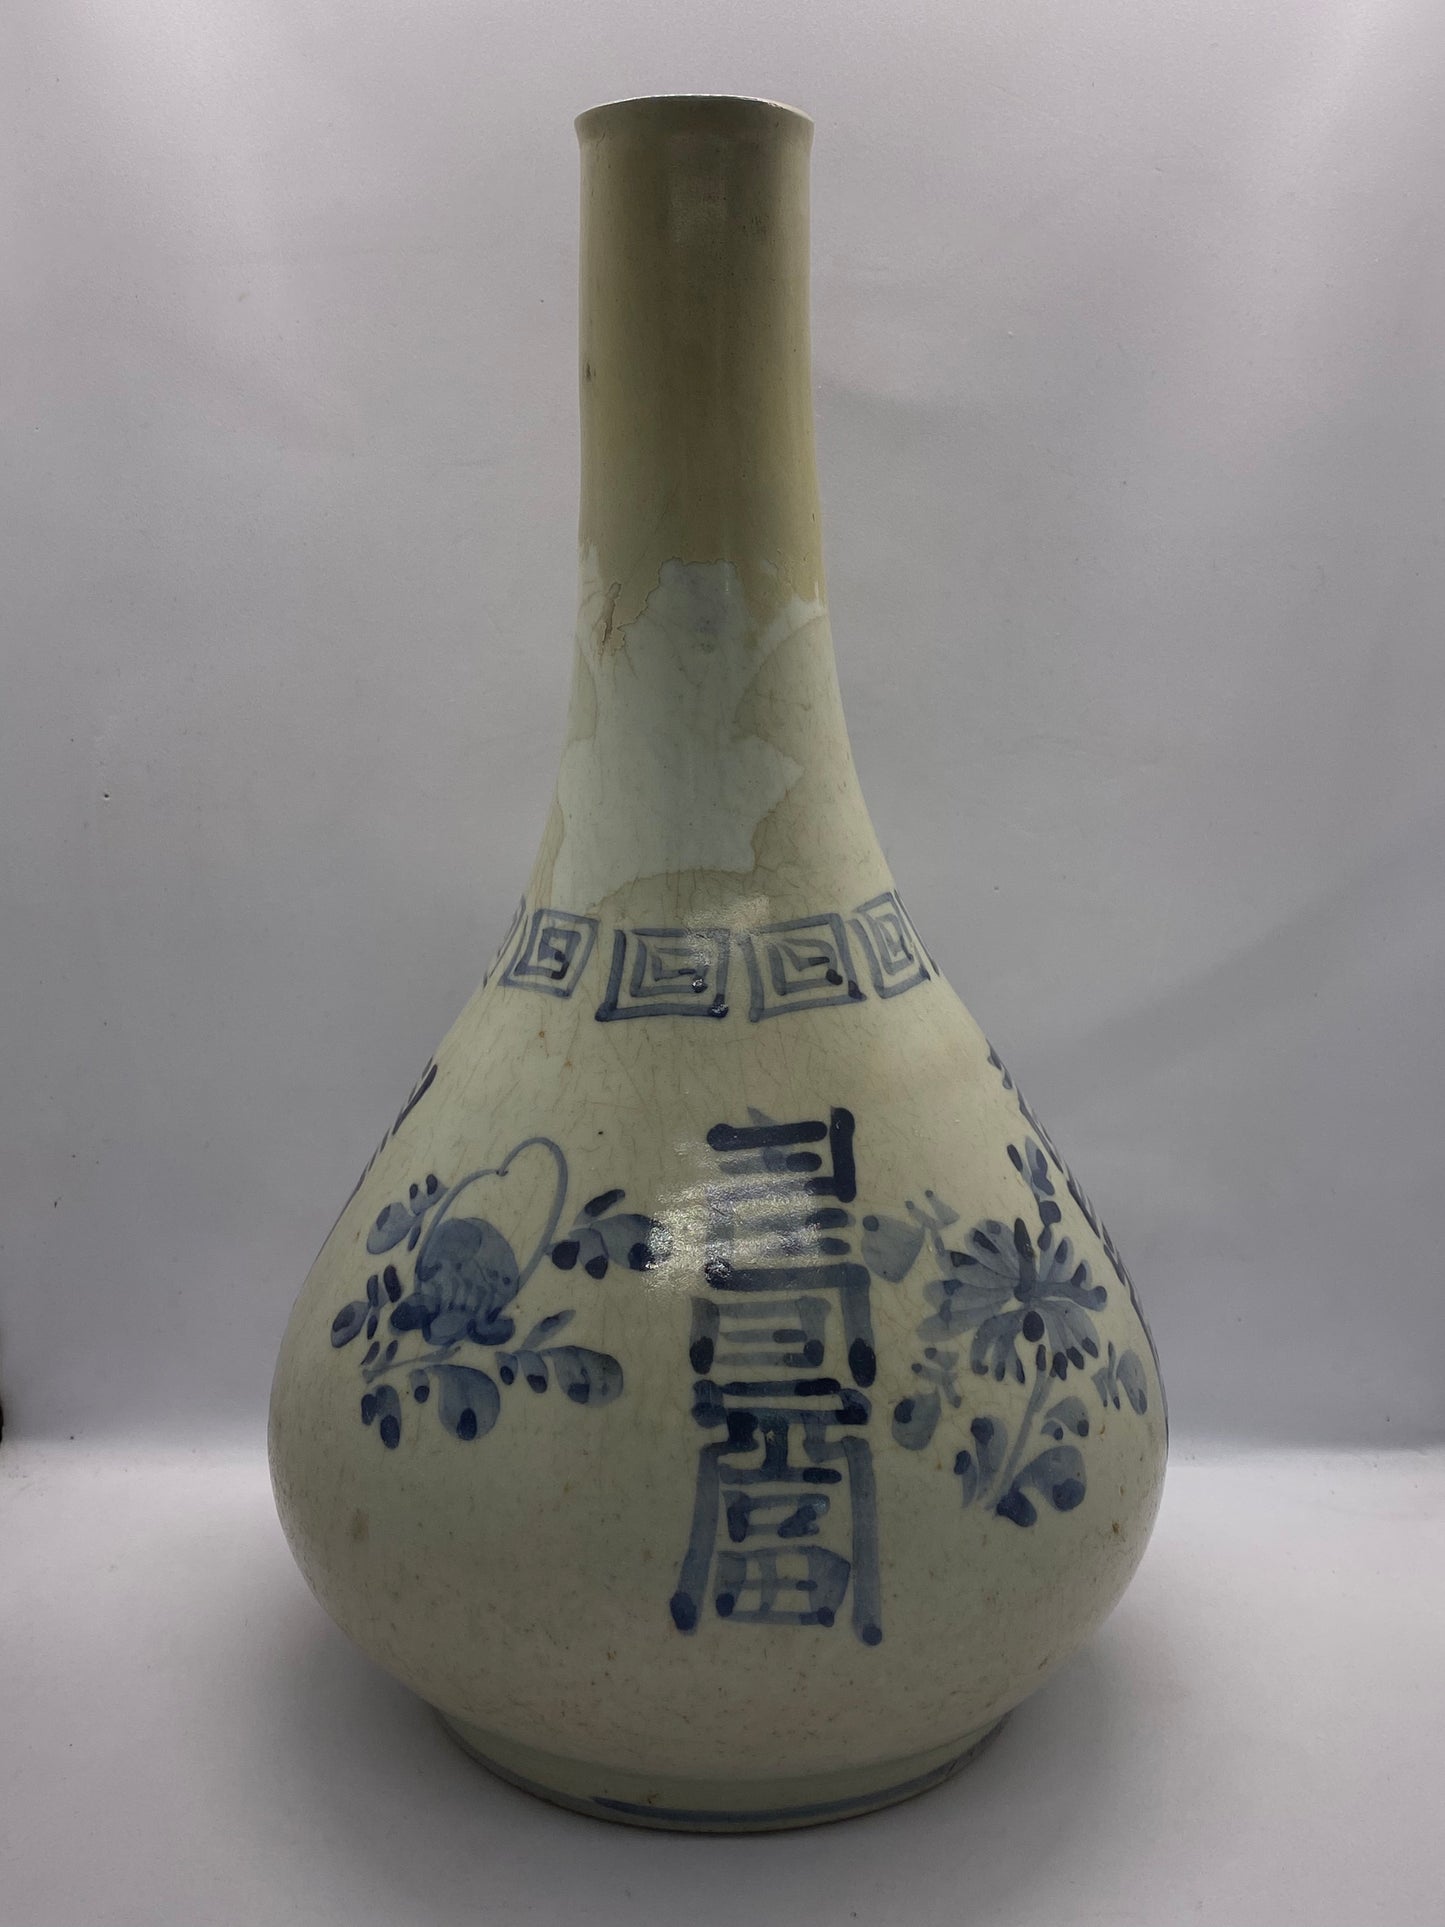 Late Joseon Period Bottle Form Vase (19th c.), White Porcelain with Cobalt Glaze